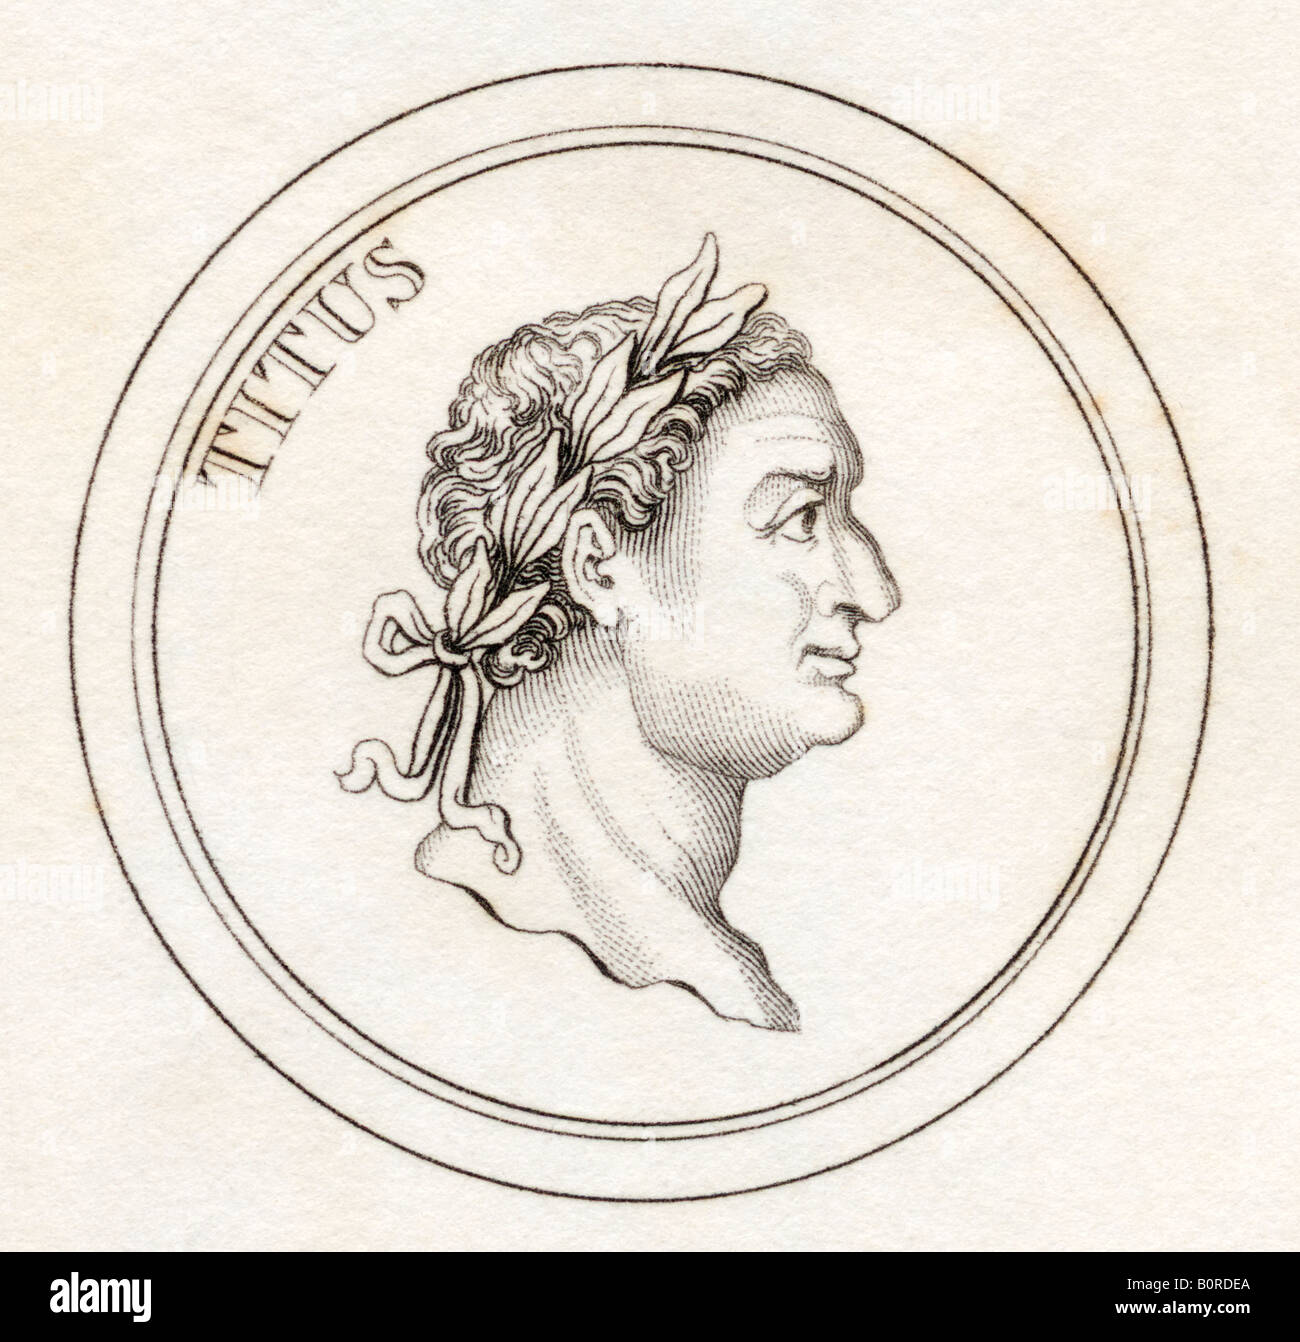 Titus Flavius Sabinus Vespasianus, aka Titus, AD39 - 81. Roman emperor. From the book Crabbs Historical Dictionary, published 1825. Stock Photo